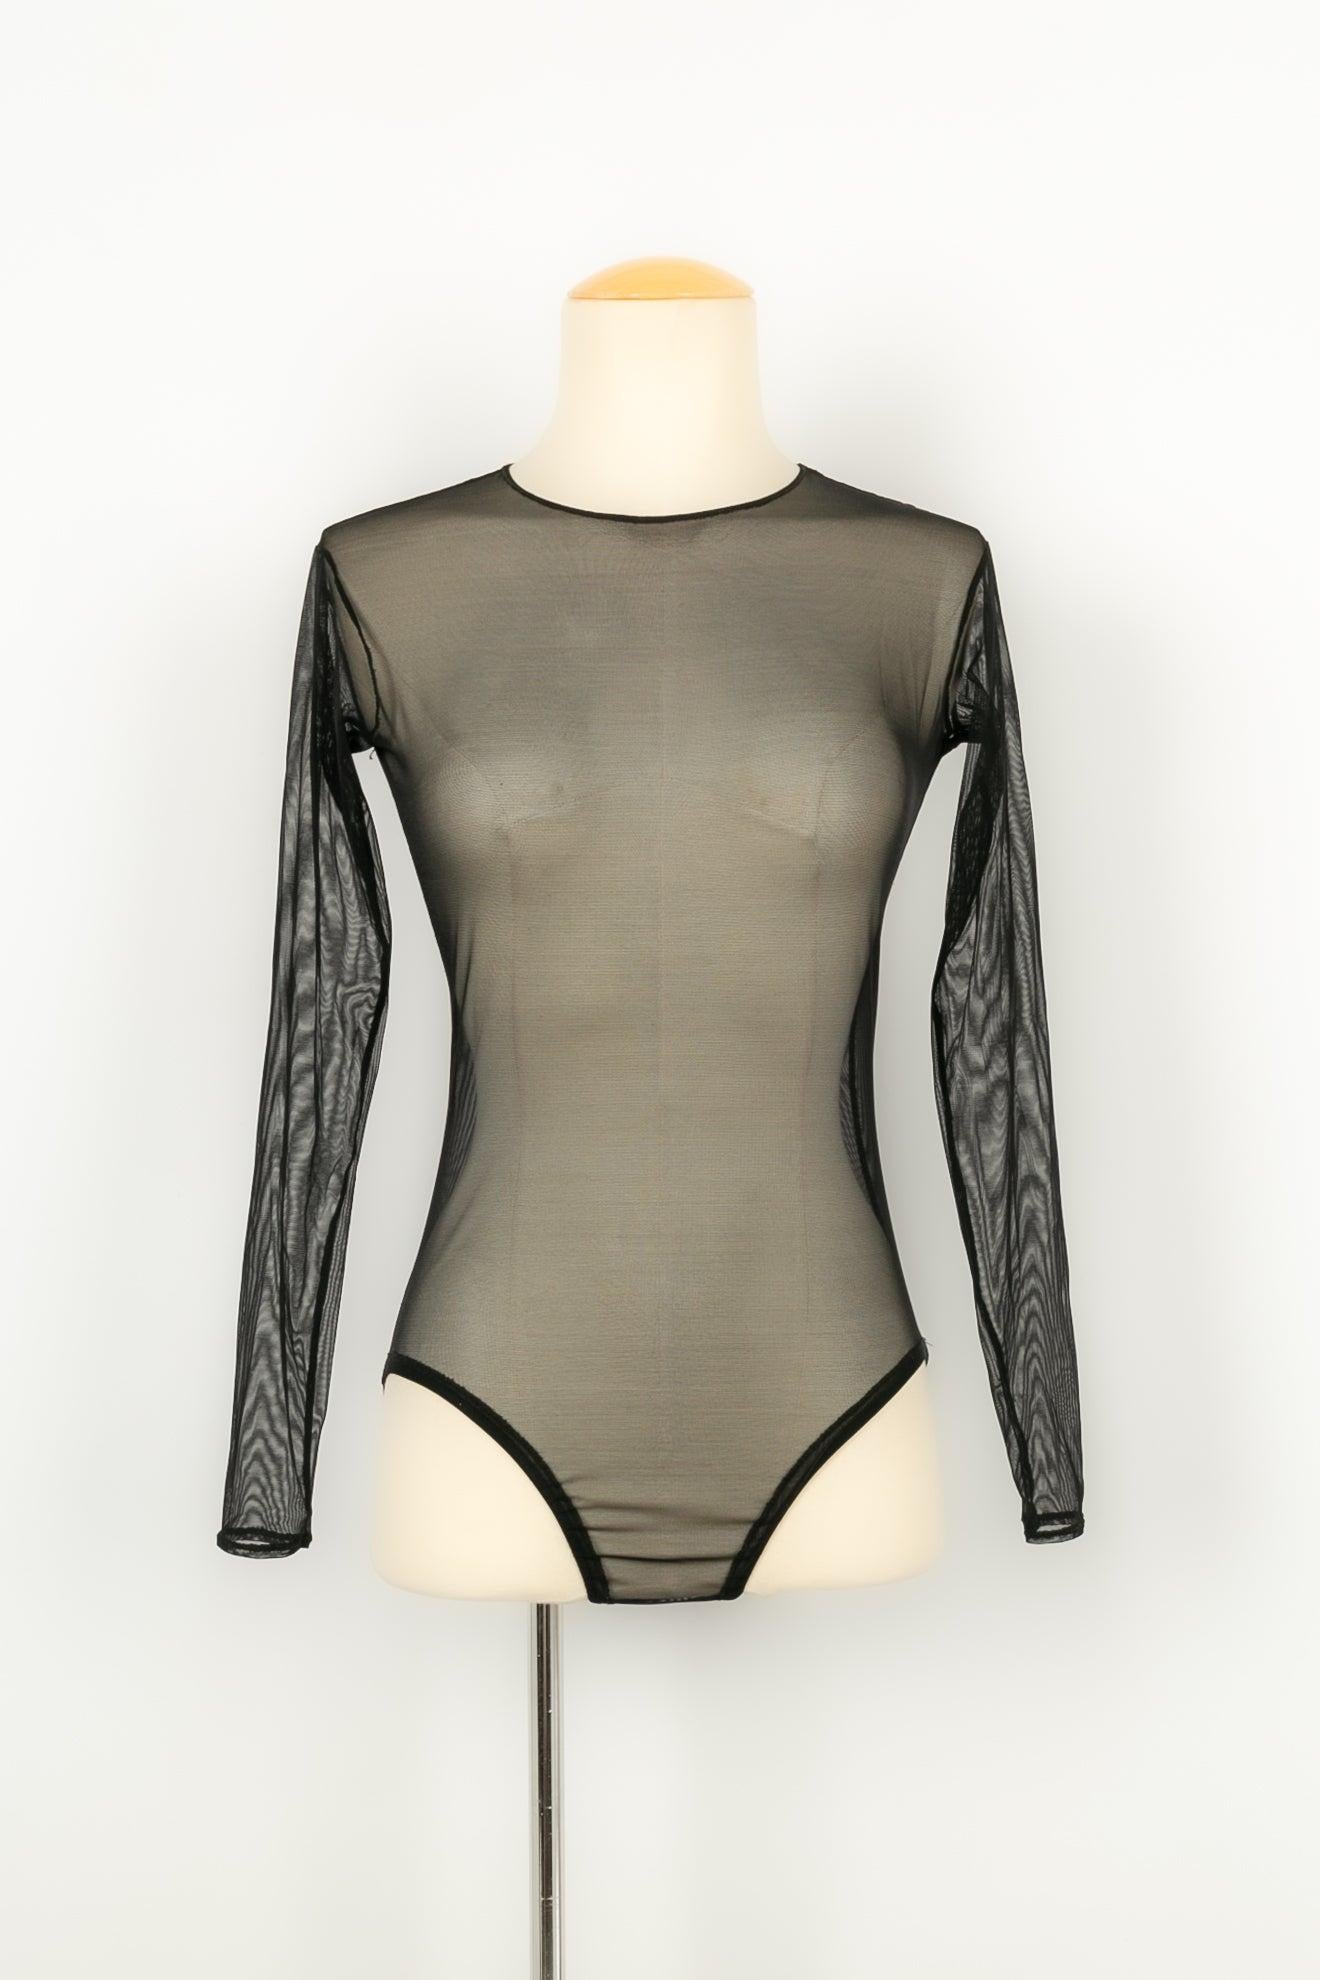 Christian Lacroix Haute Couture Set Composed of Black Velvet Jacket For Sale 7